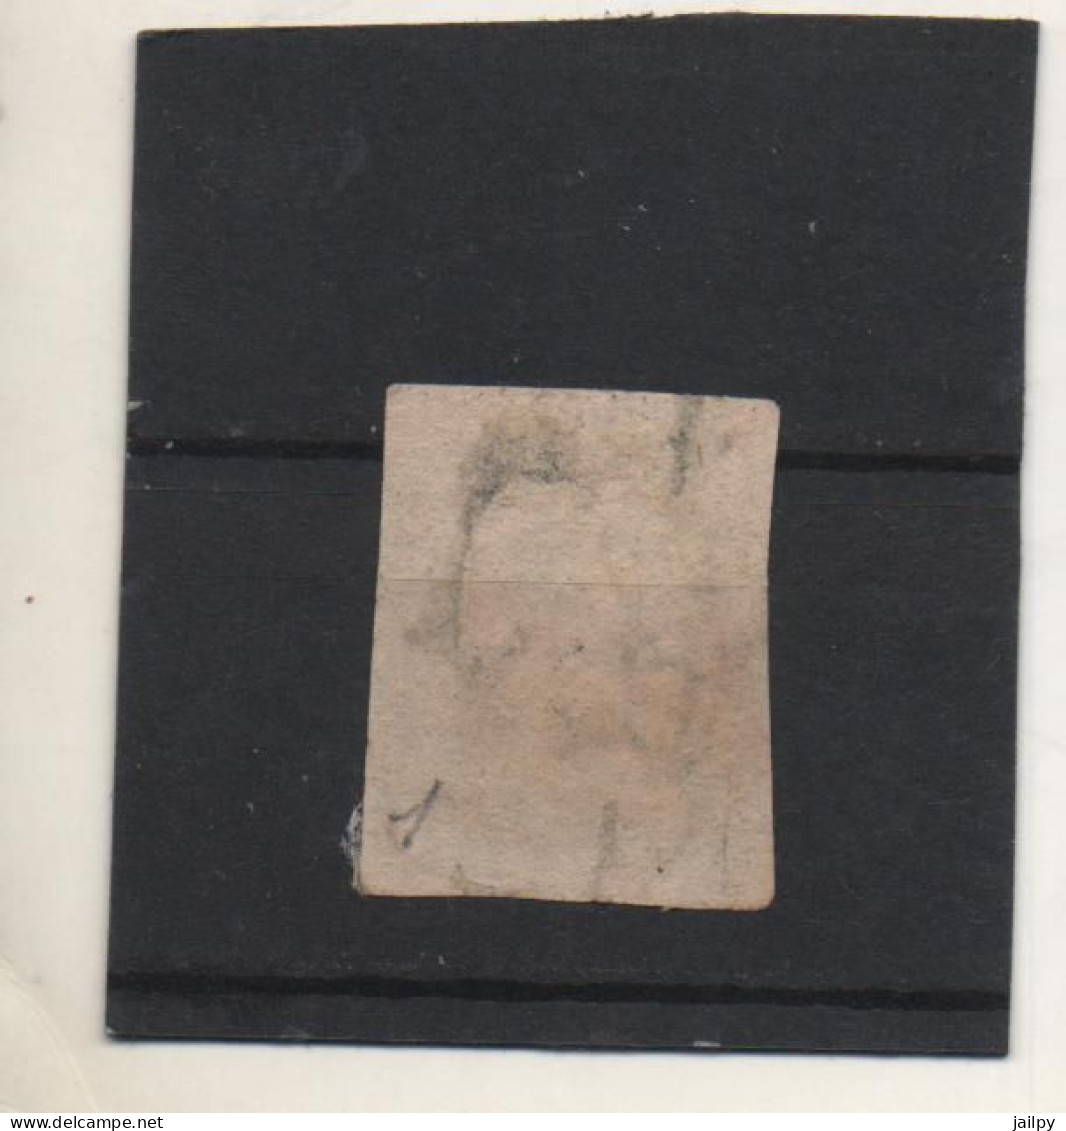 GRANDE BRETAGNE    1 Penny   1840   Y&T: 1    Oblitéré - Gebraucht